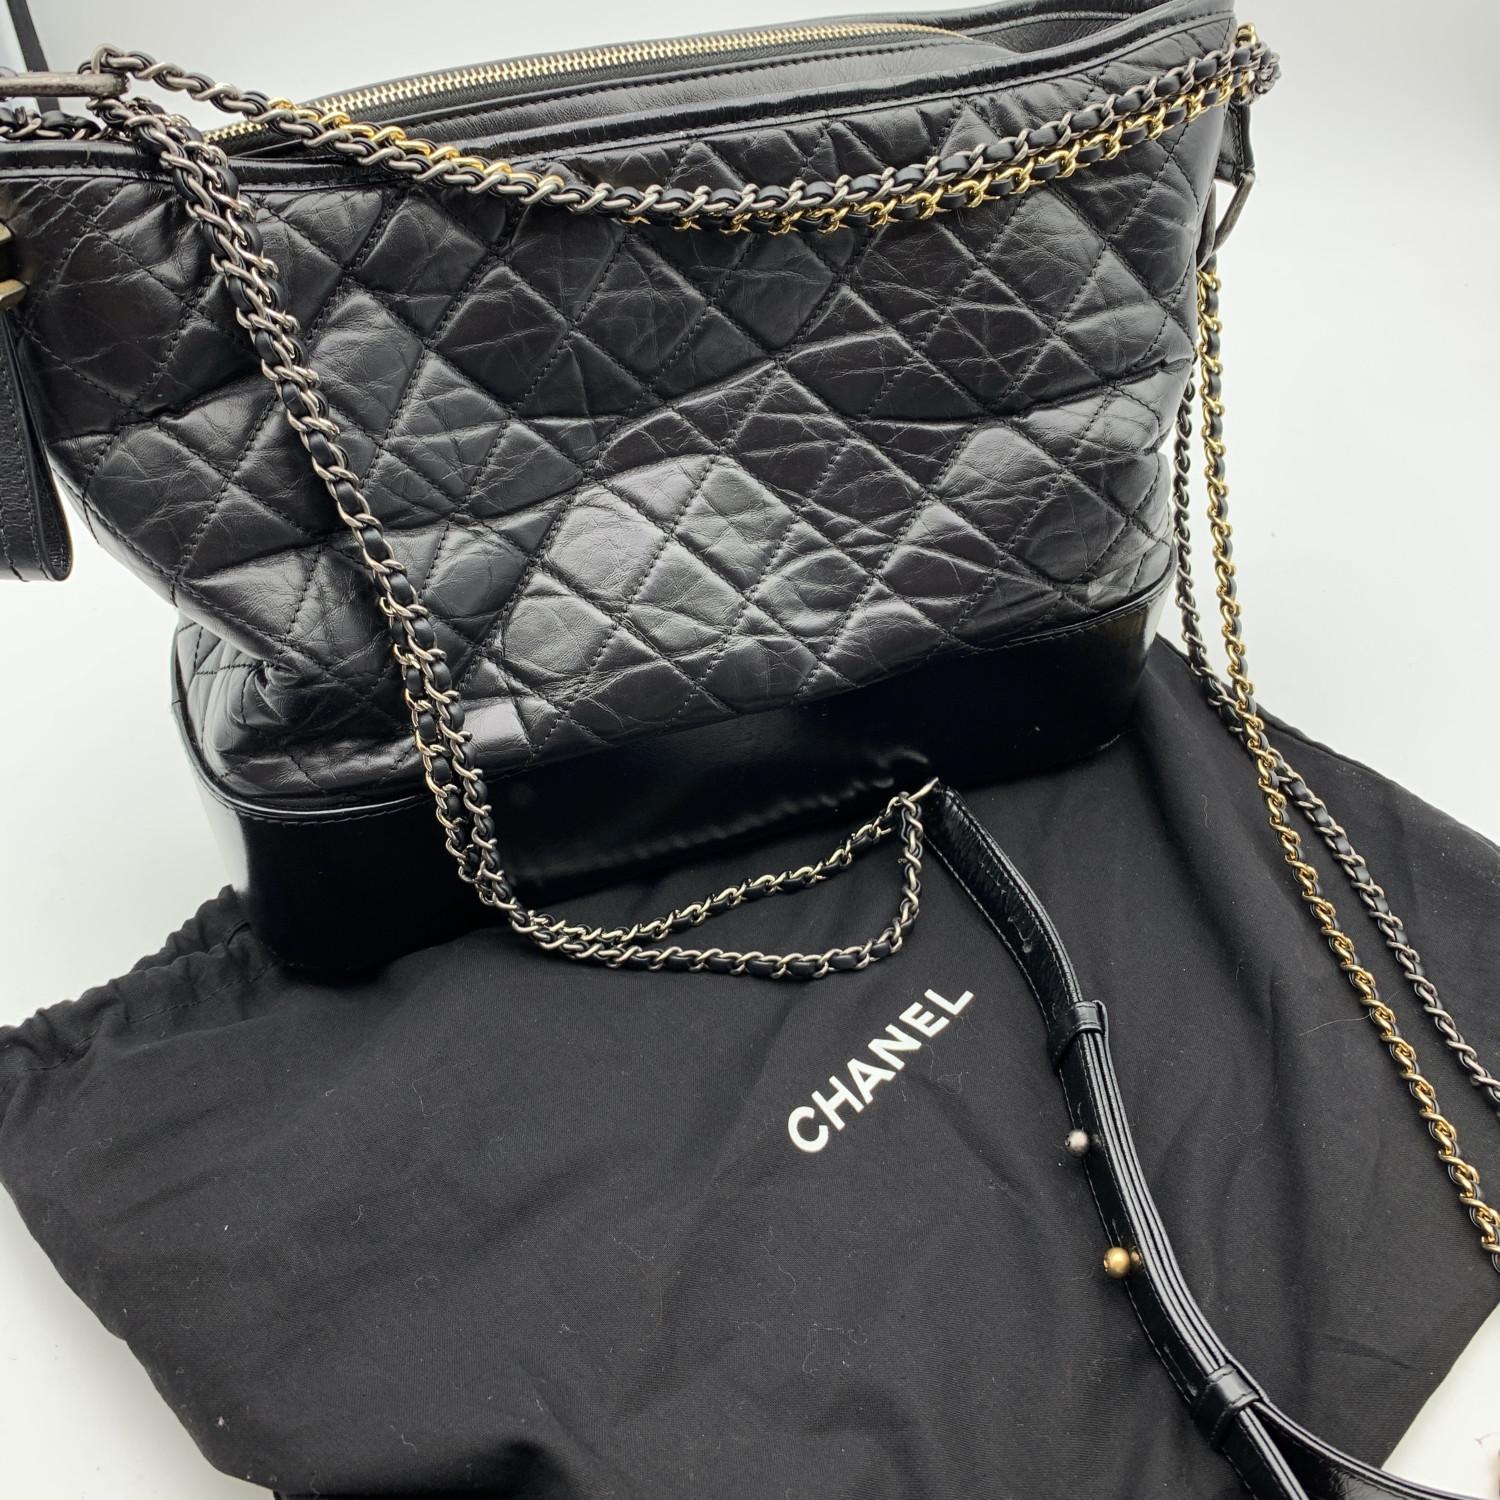 Women's Chanel Black Quilted Leather Gabrielle Large Hobo Shoulder Bag